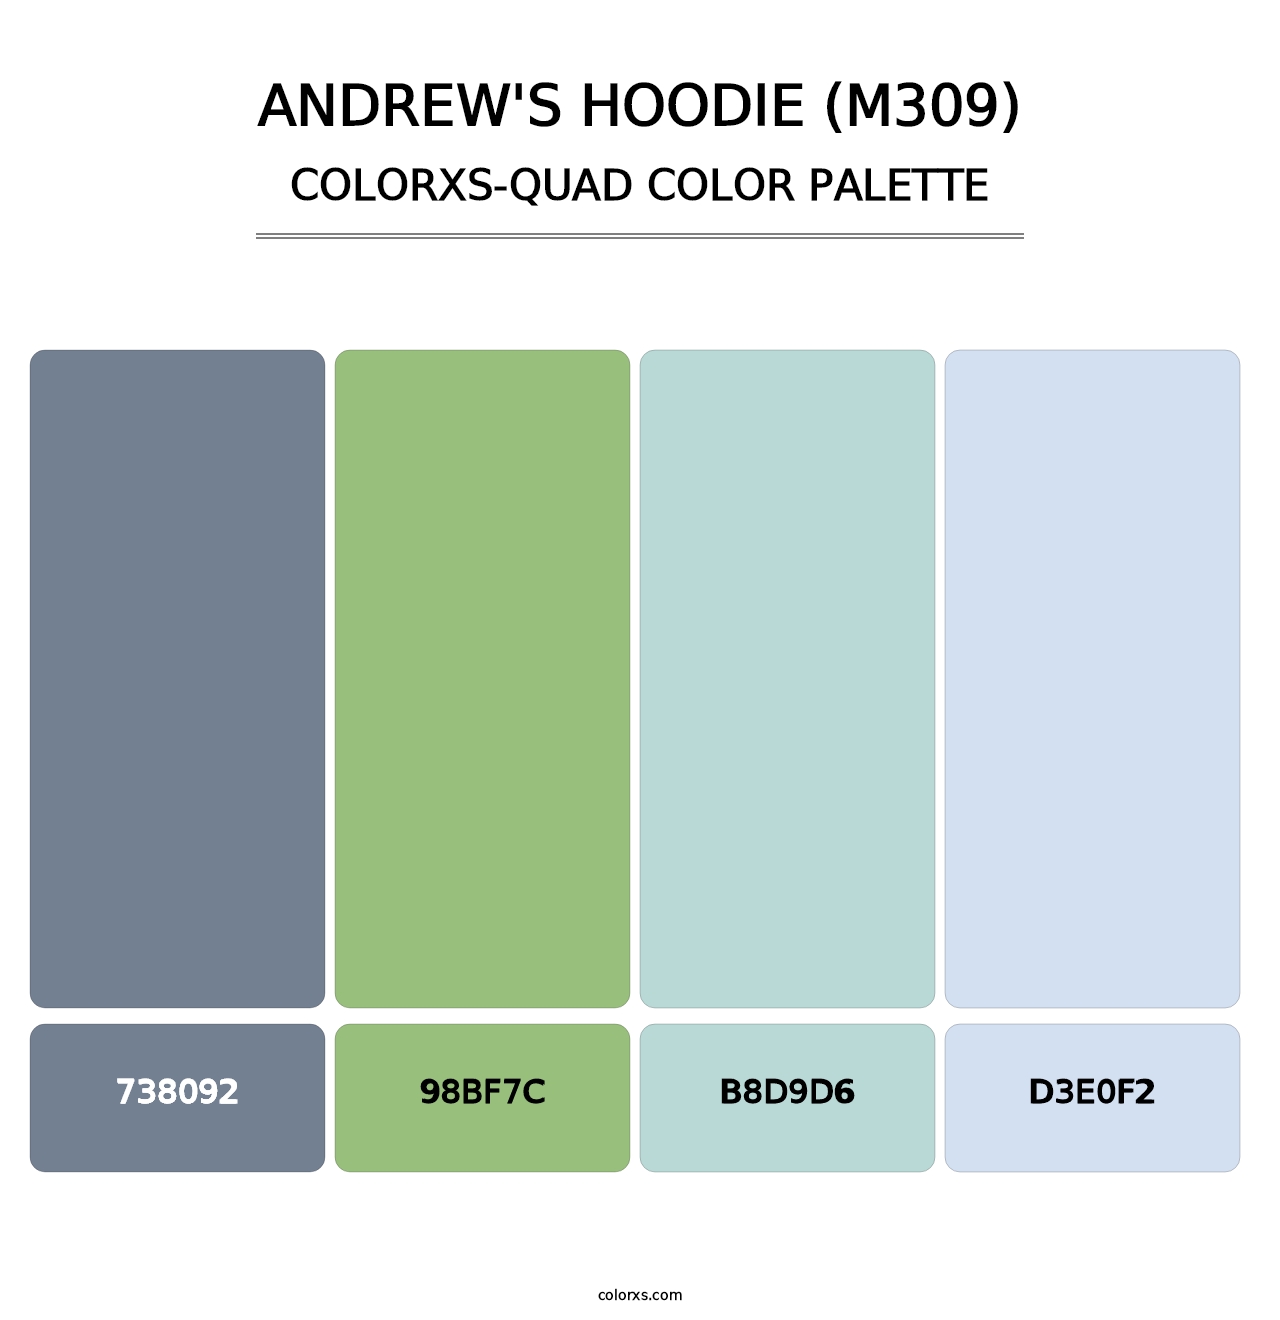 Andrew's Hoodie (M309) - Colorxs Quad Palette